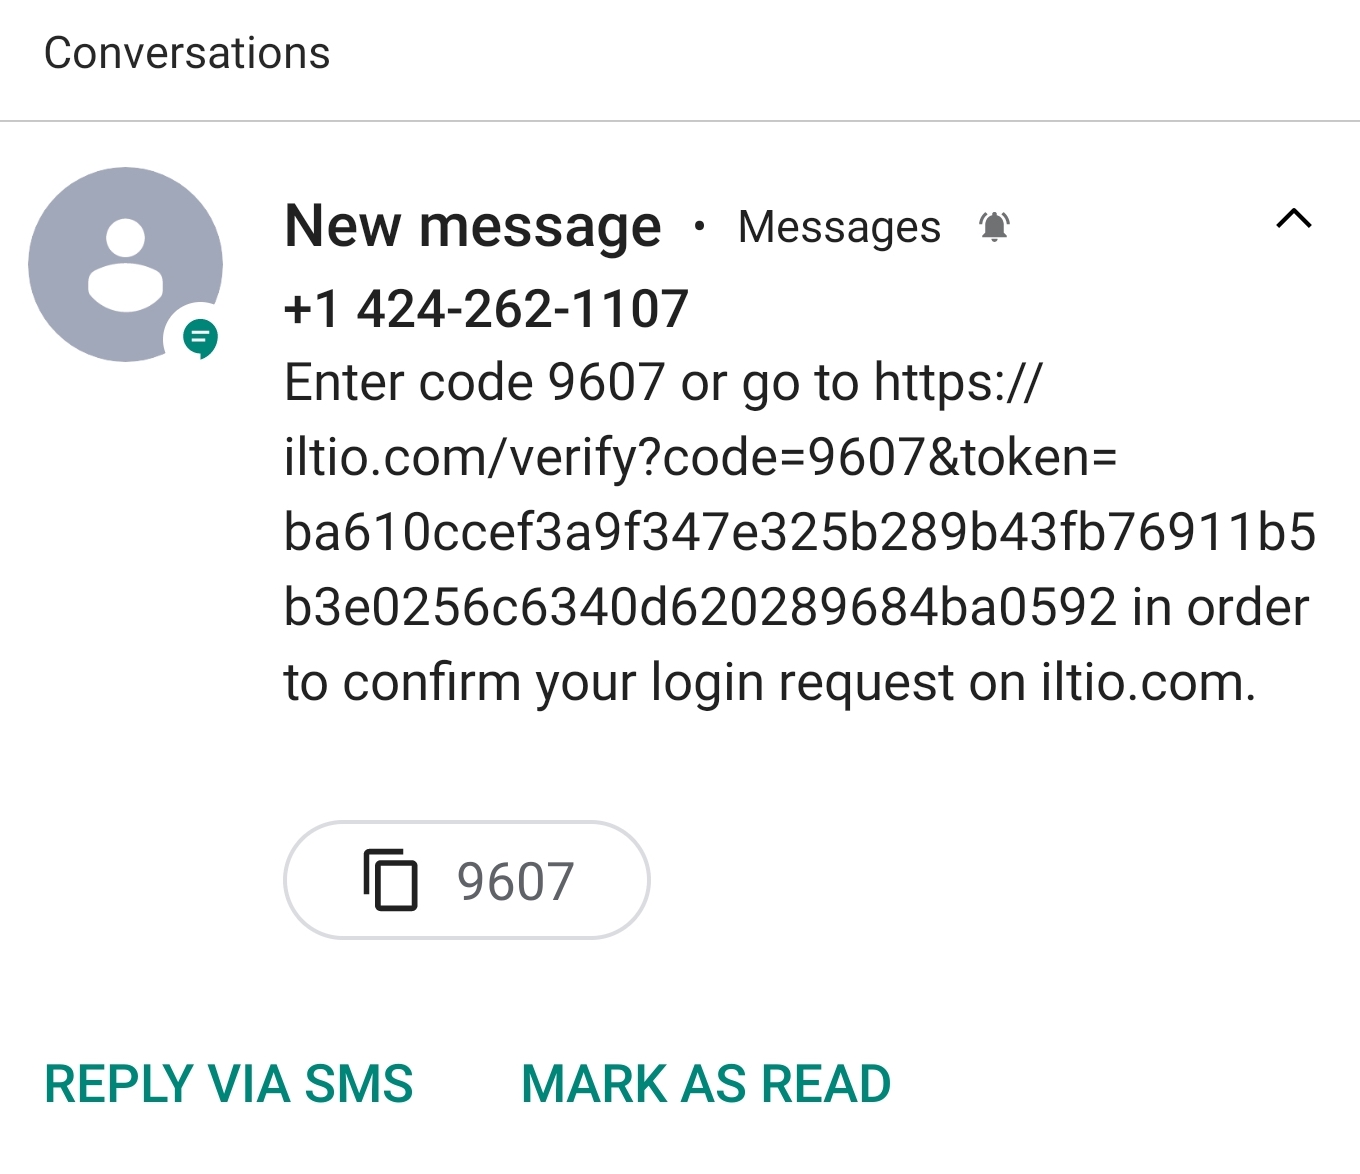 Verification message received through text